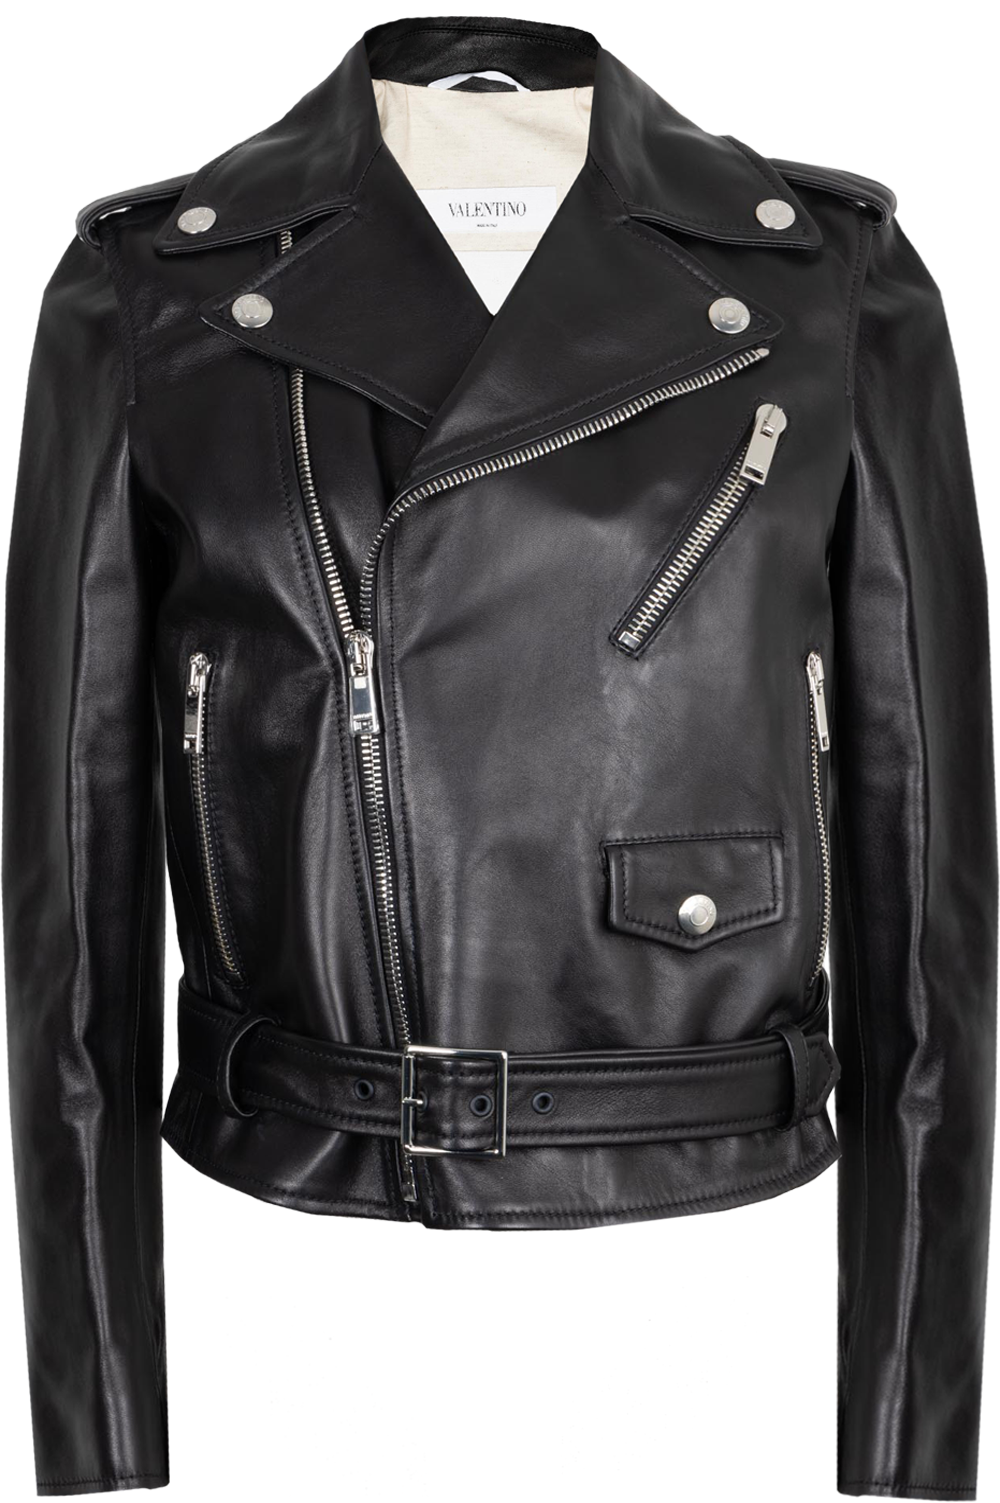 VALENTINO Biker Jacket Leather Black